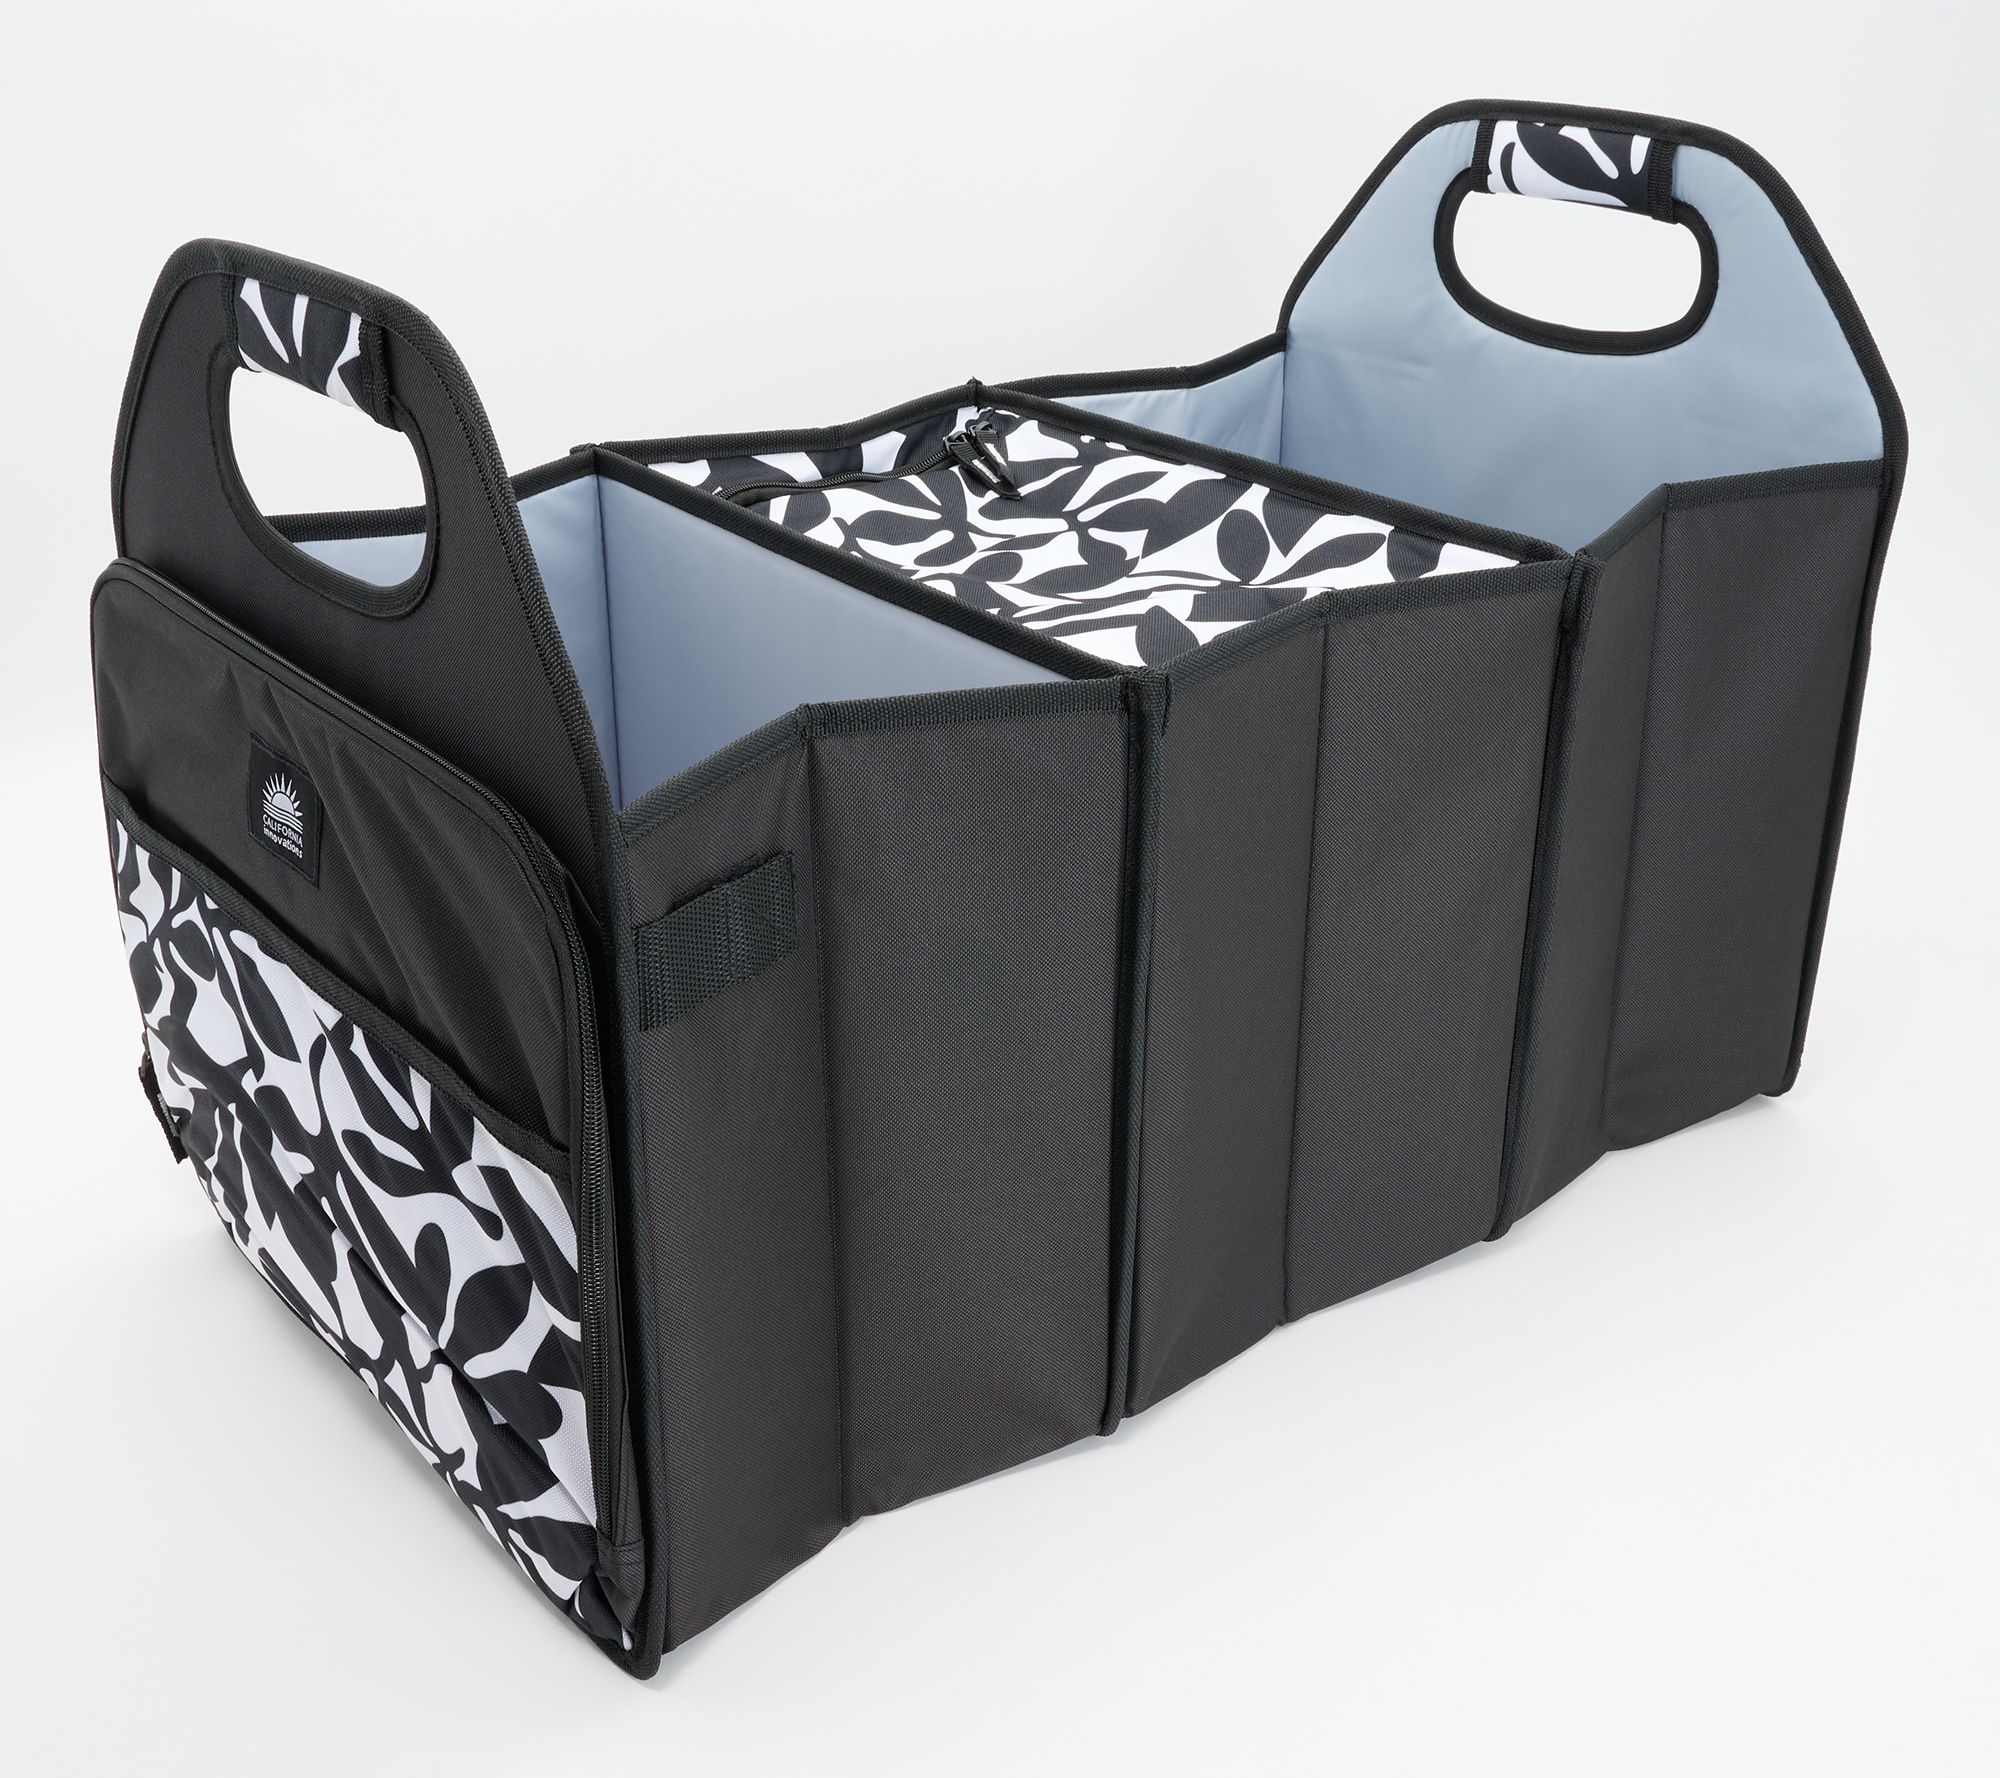 Enjoy Organizer -Large Carry Caddy Bin Basket Portable Office Desk Storage Diy- Made in USA (Orion Gray)